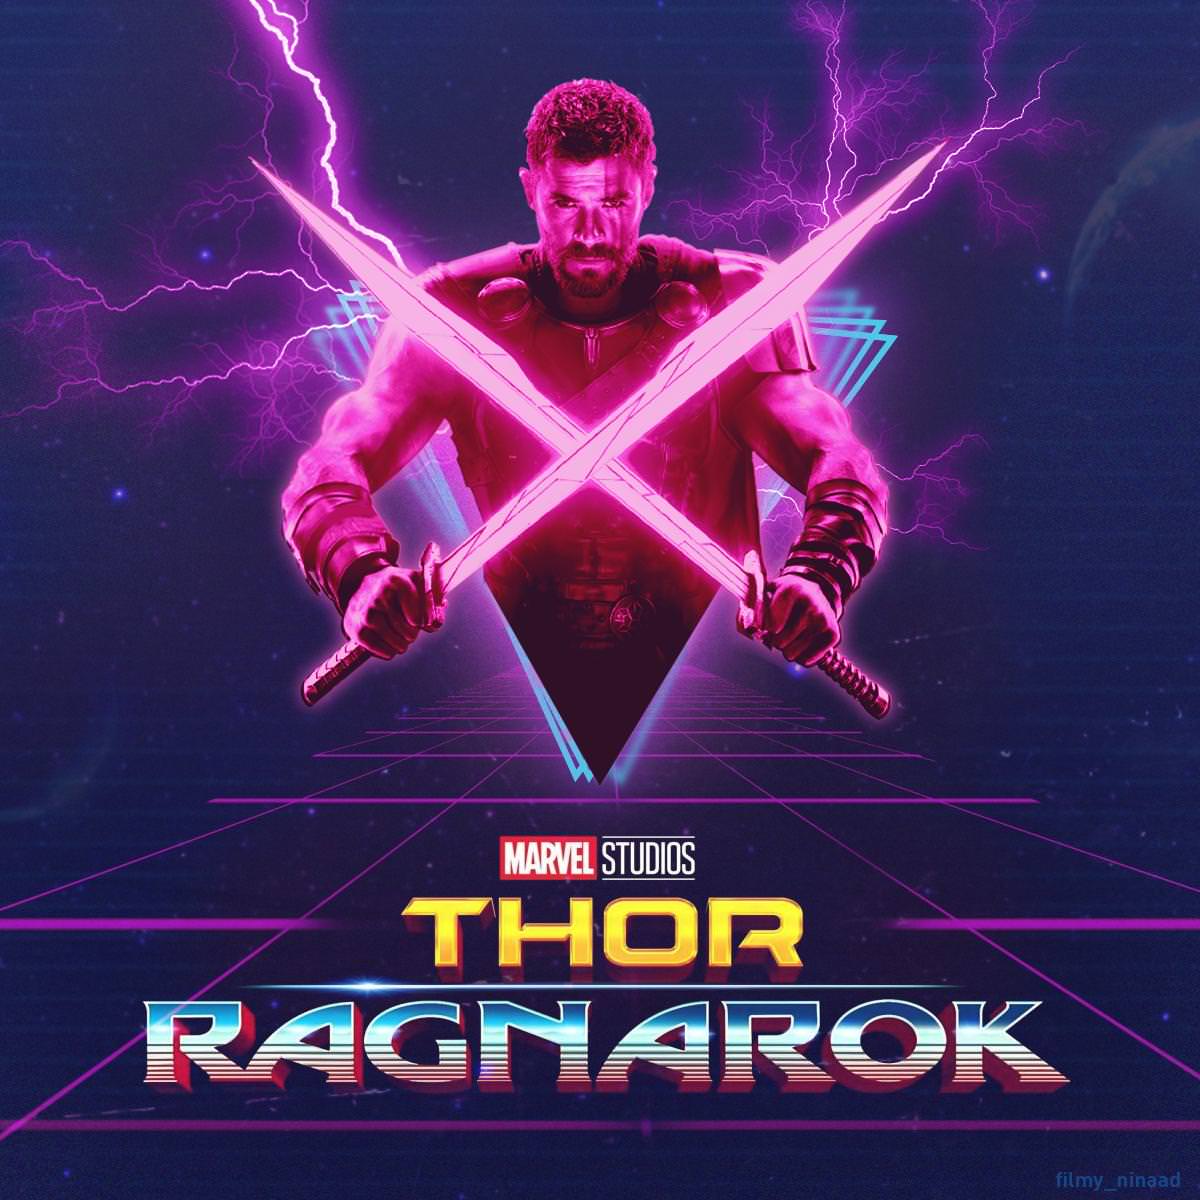 Thor Ragnarok Outrun style posters